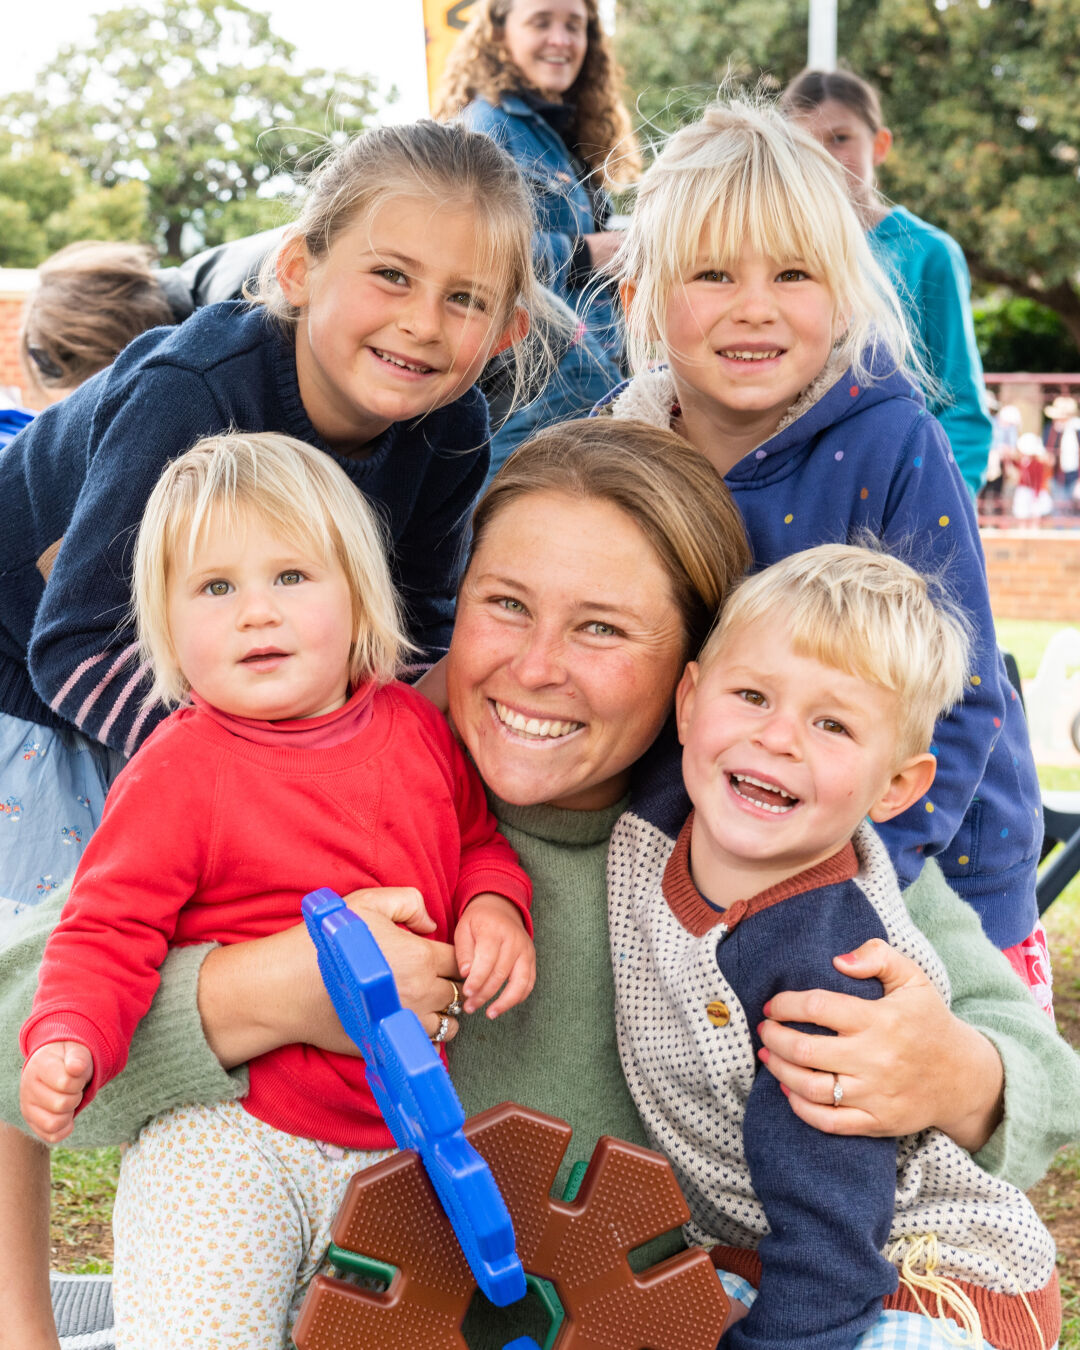 Smiling mum with four children